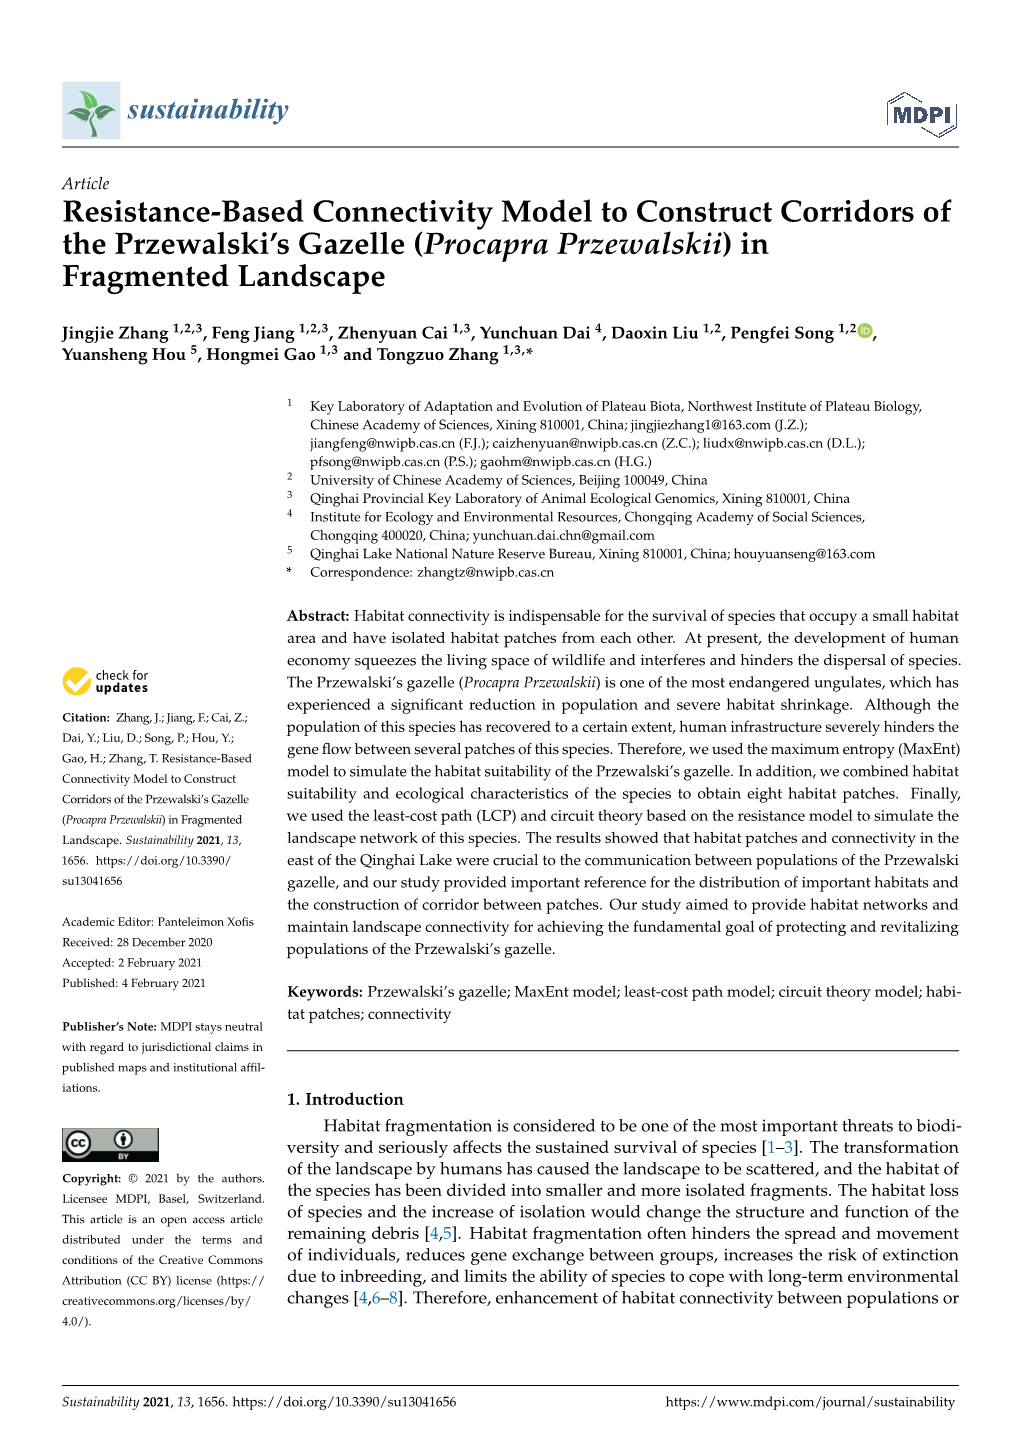 Resistance-Based Connectivity Model to Construct Corridors of the Przewalski’S Gazelle (Procapra Przewalskii) in Fragmented Landscape